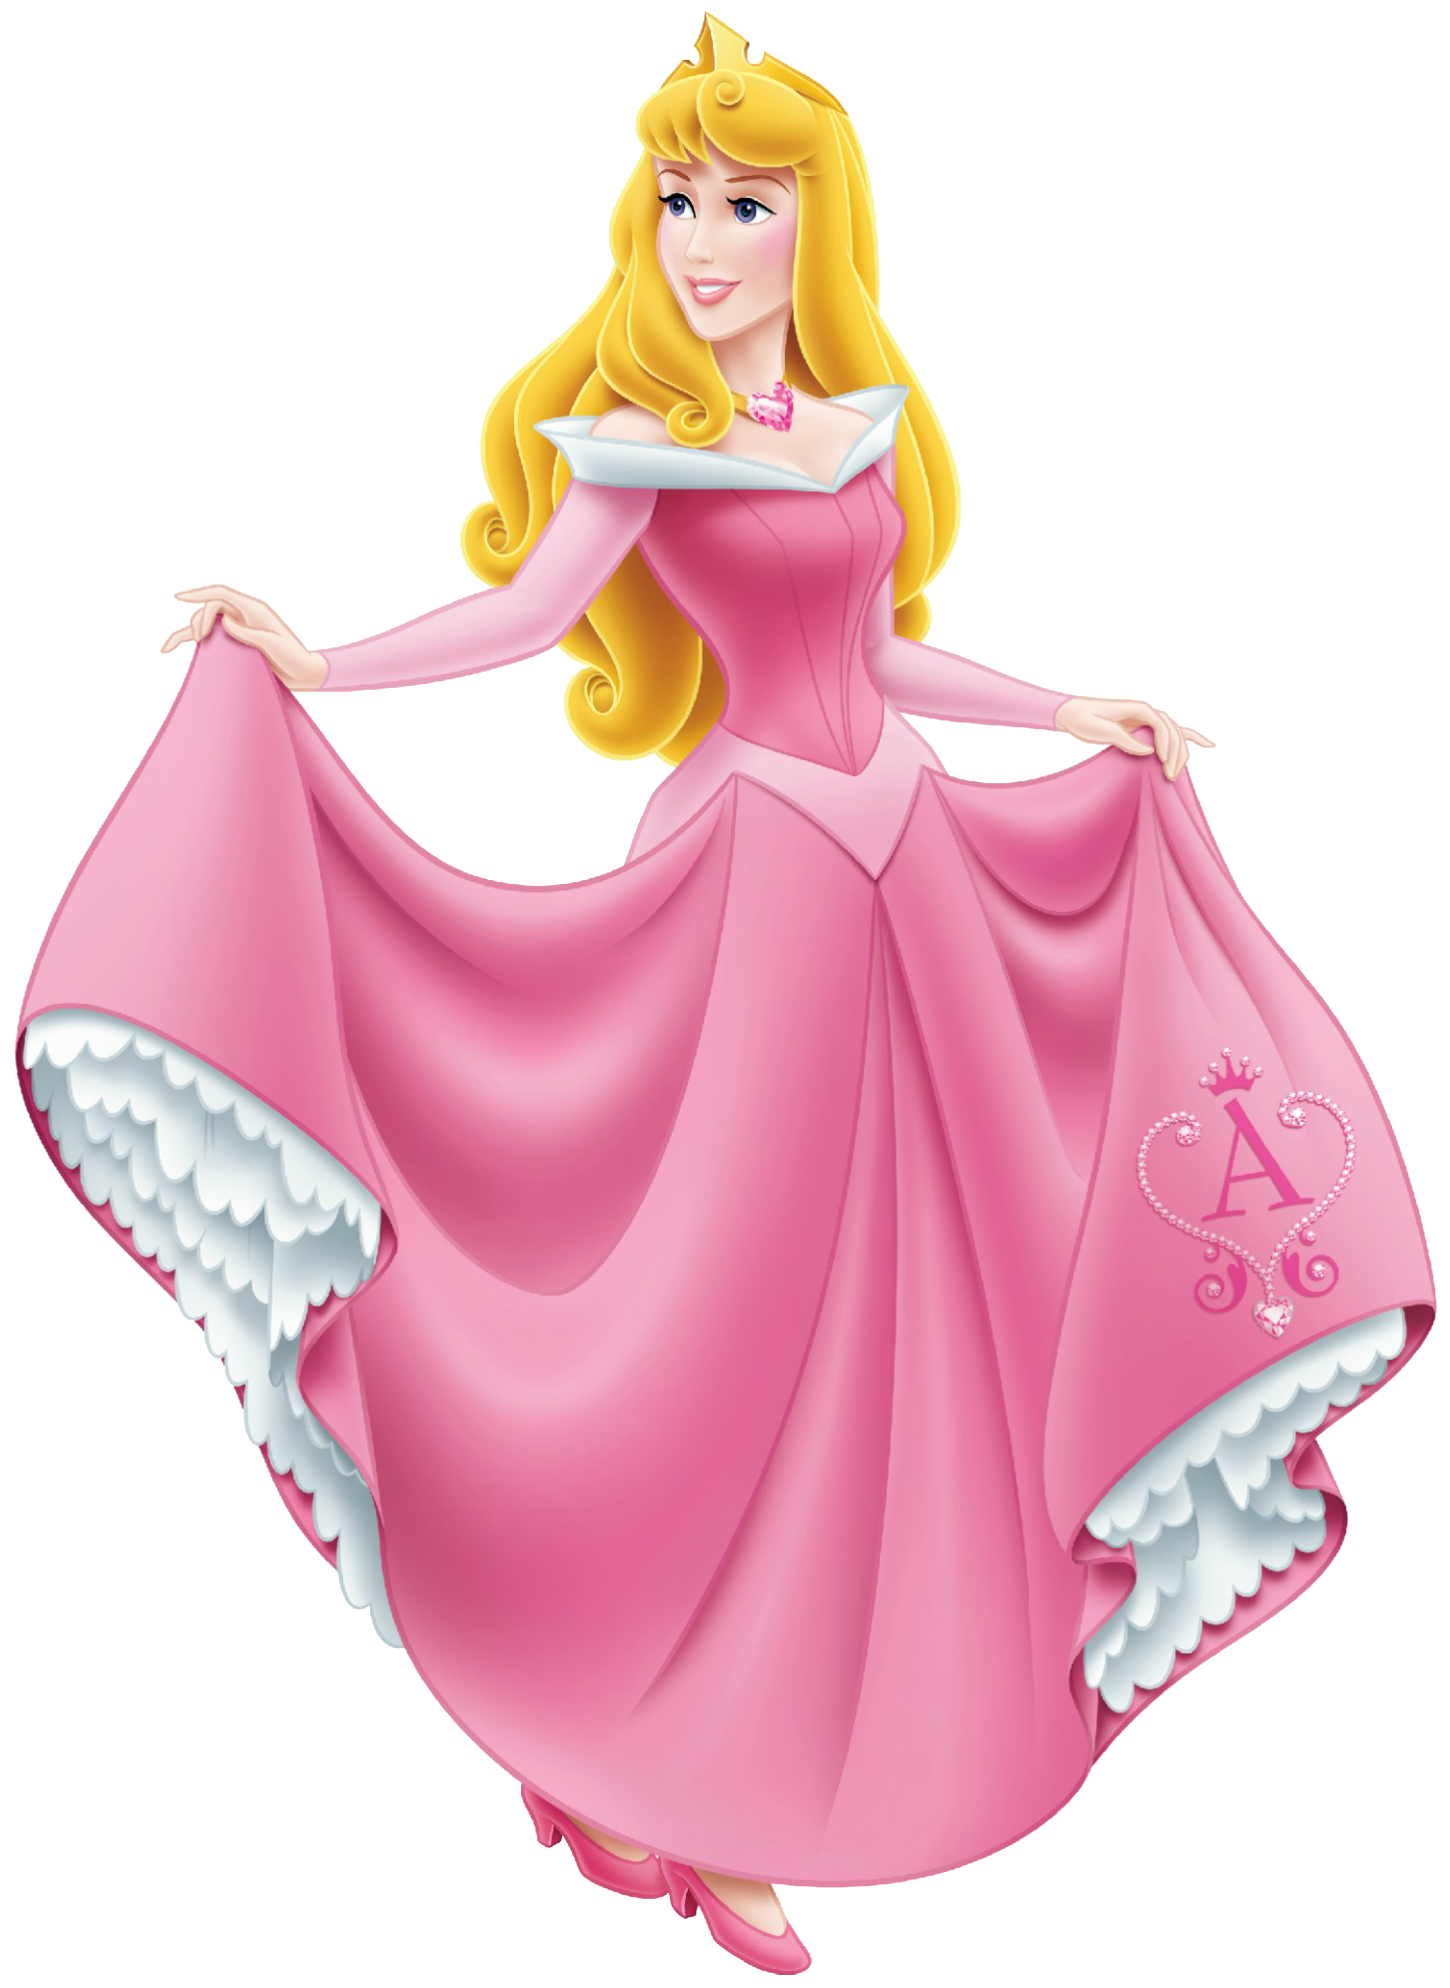 Download PNG image - Princess Aurora Transparent Background 